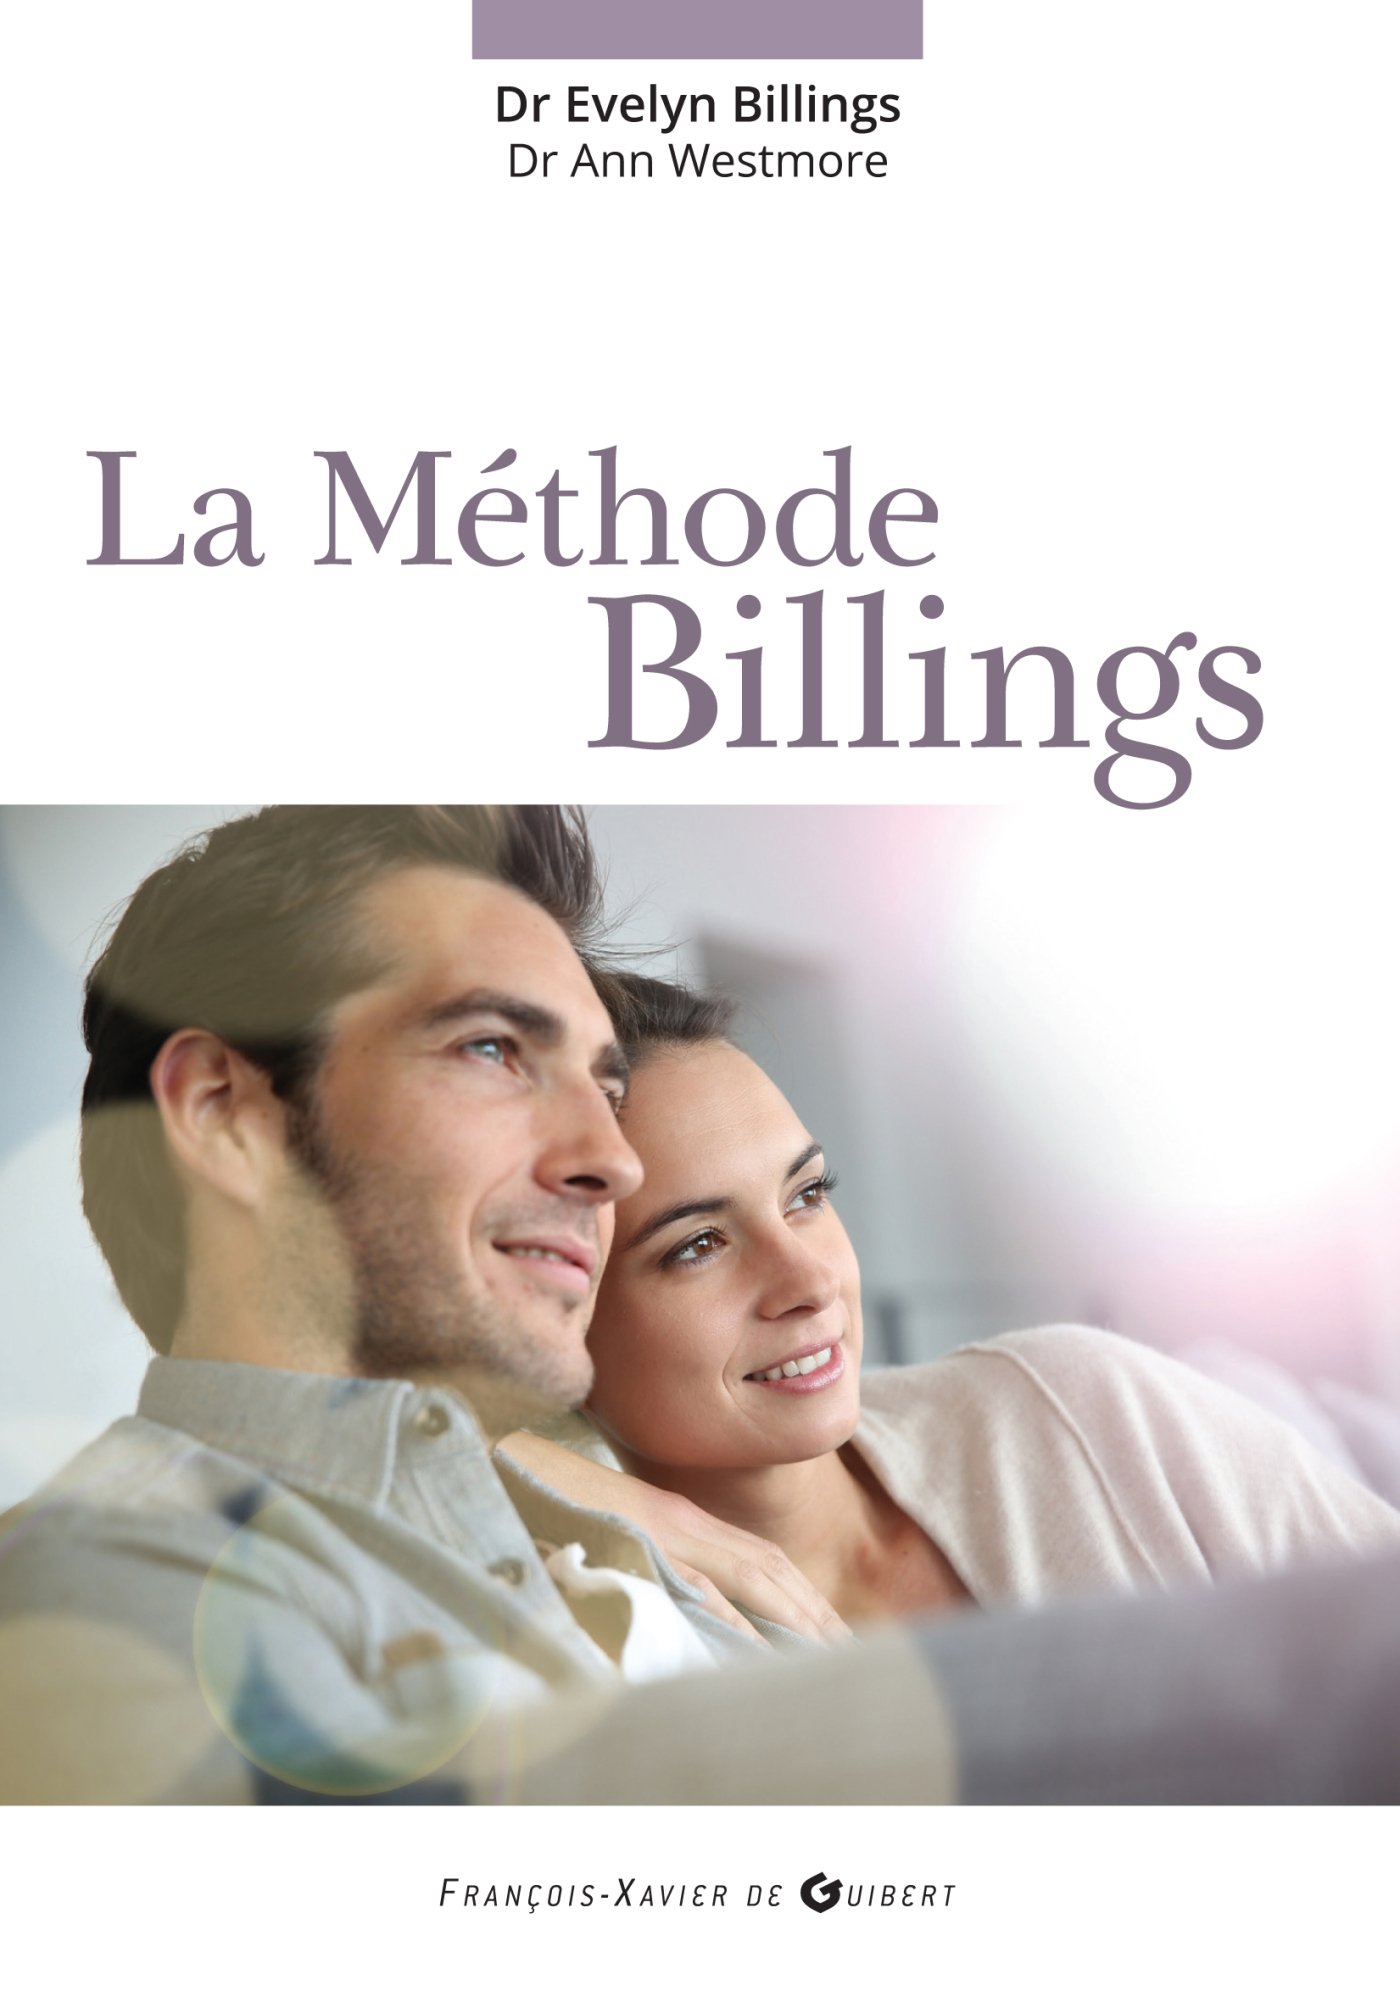 Livre La méthode BillingLivre la méthode Billings par le Dr Evelyne Billings